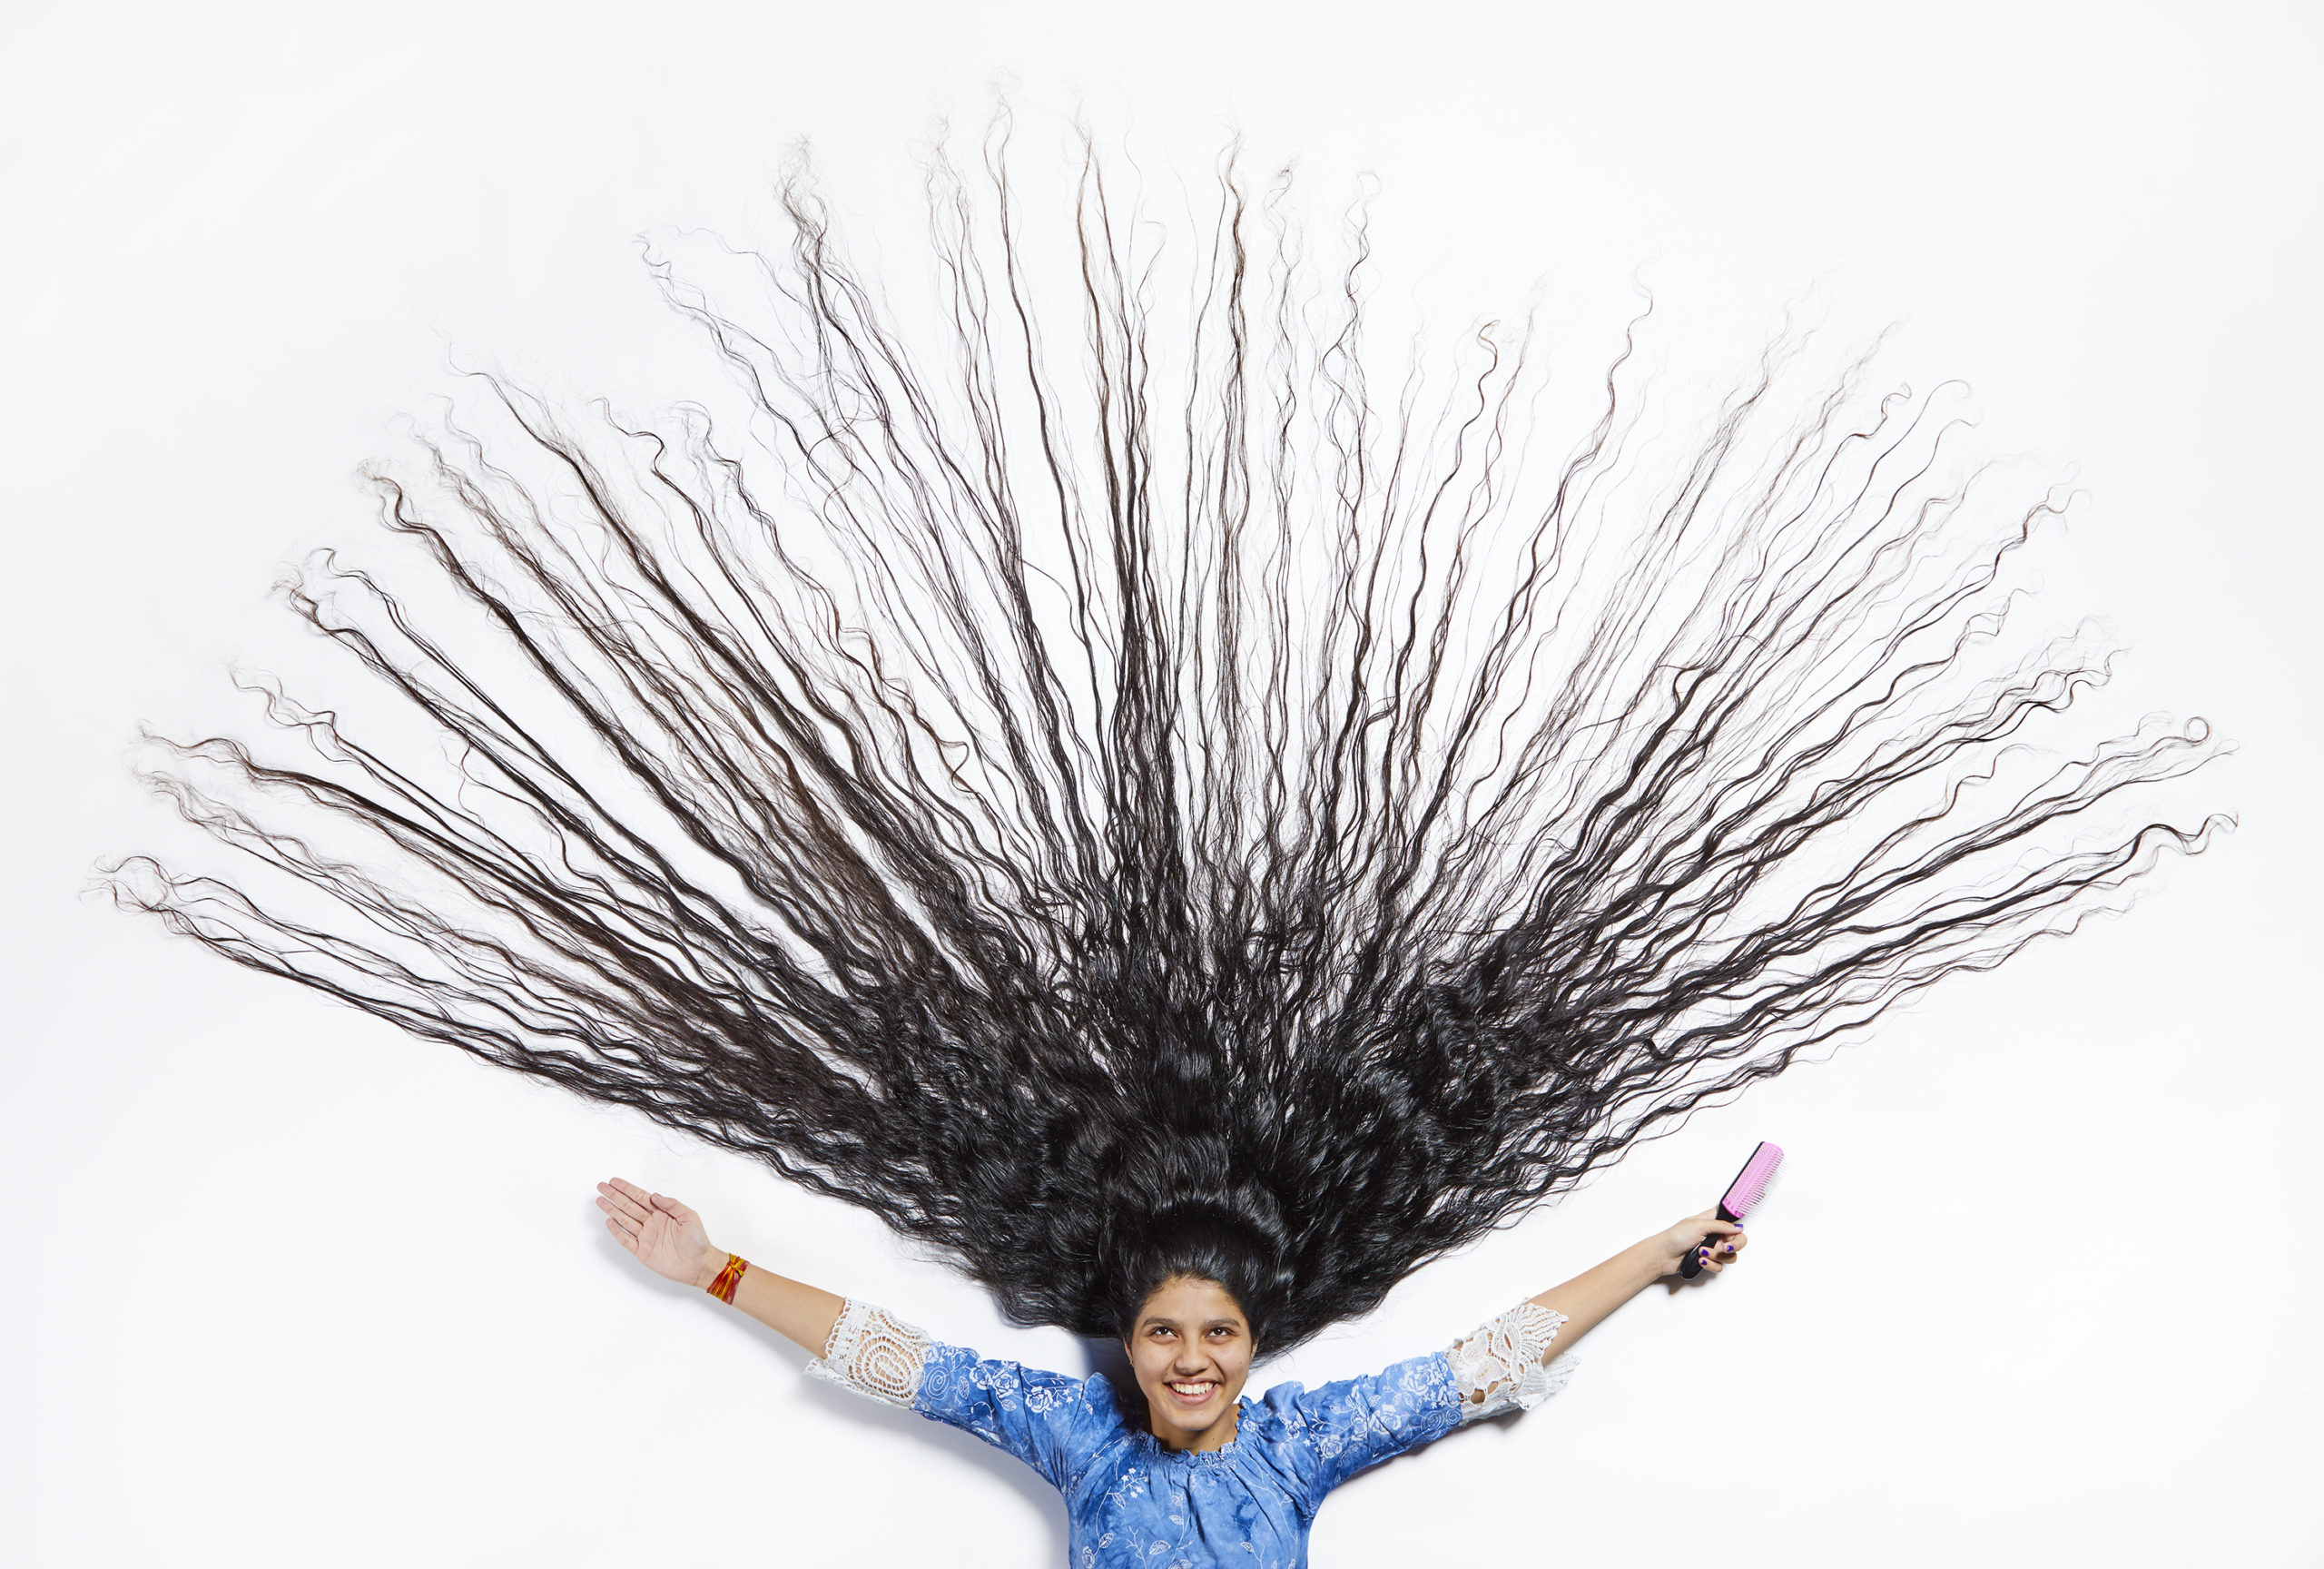 Nilanshi Patel - Longest Hair On A Teenager Guinness World Records 2020 Photo Credit: Paul Michael Hughes/Guinness World Records